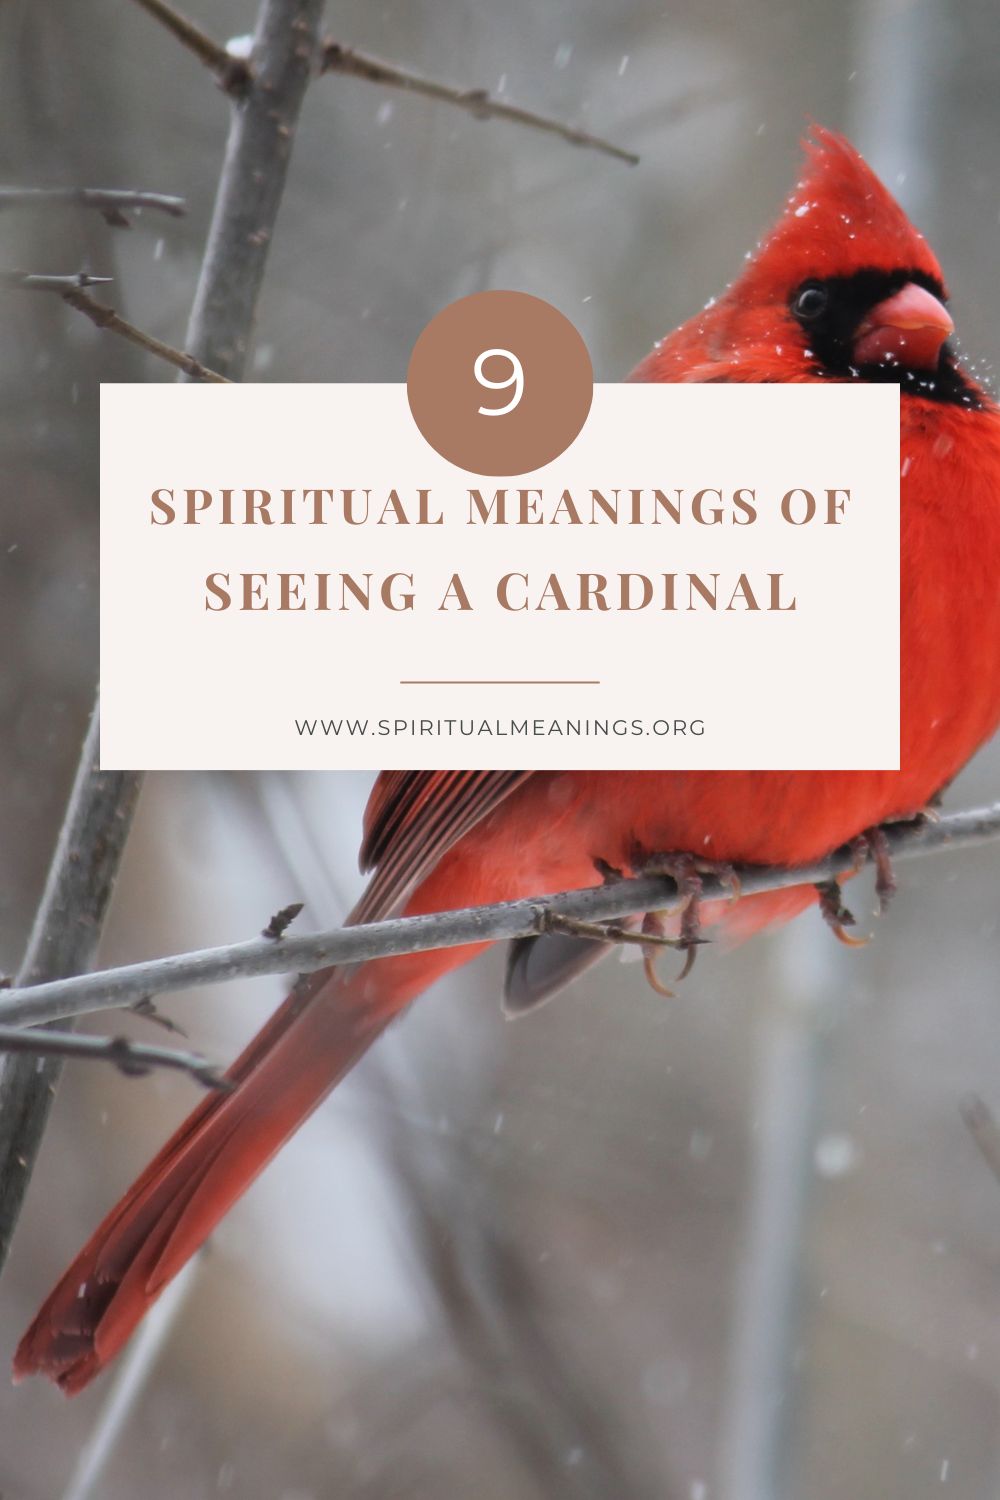 The characteristics of cardinals